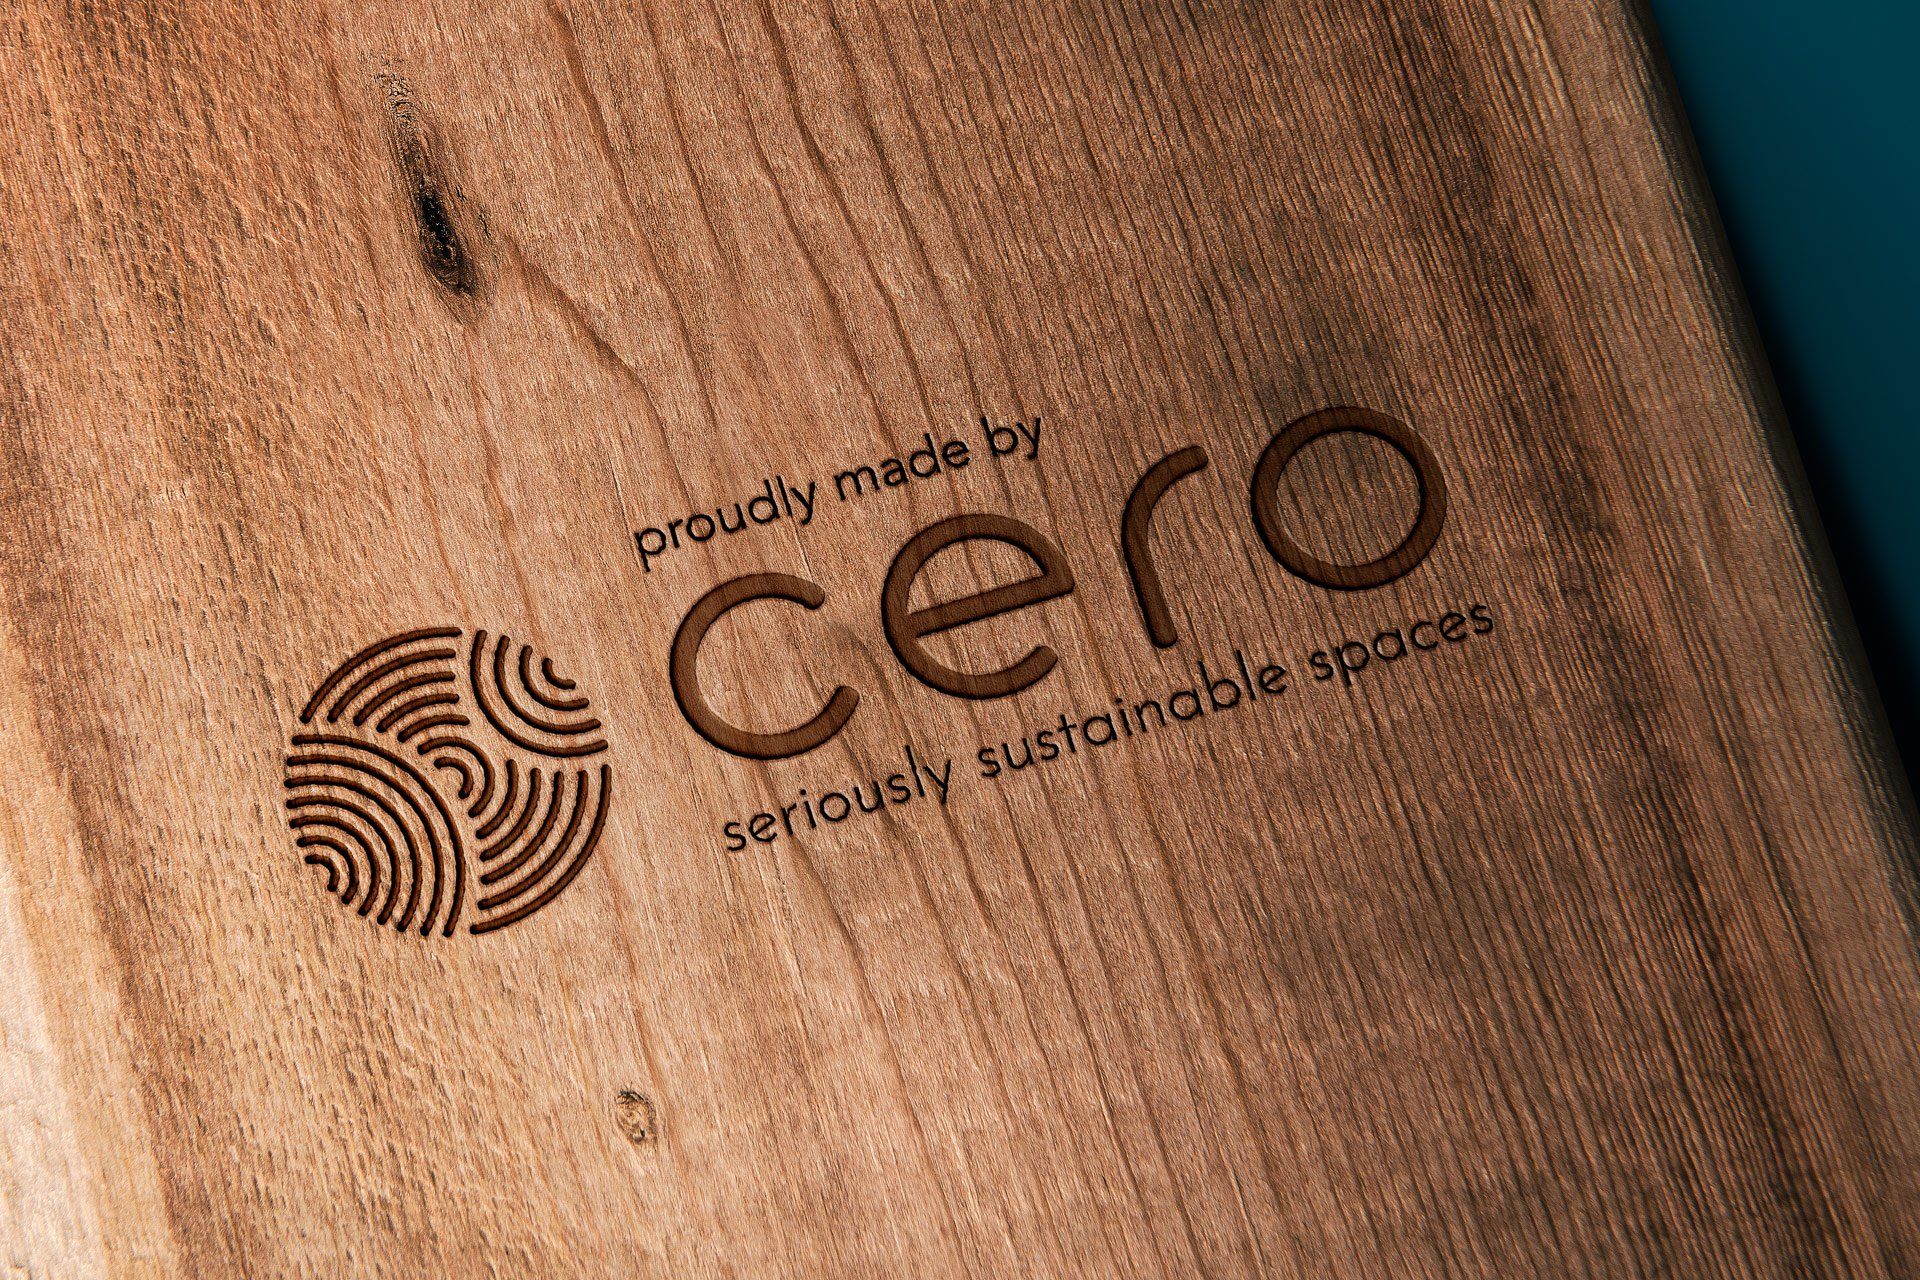 Cero logo burnt into dark wood